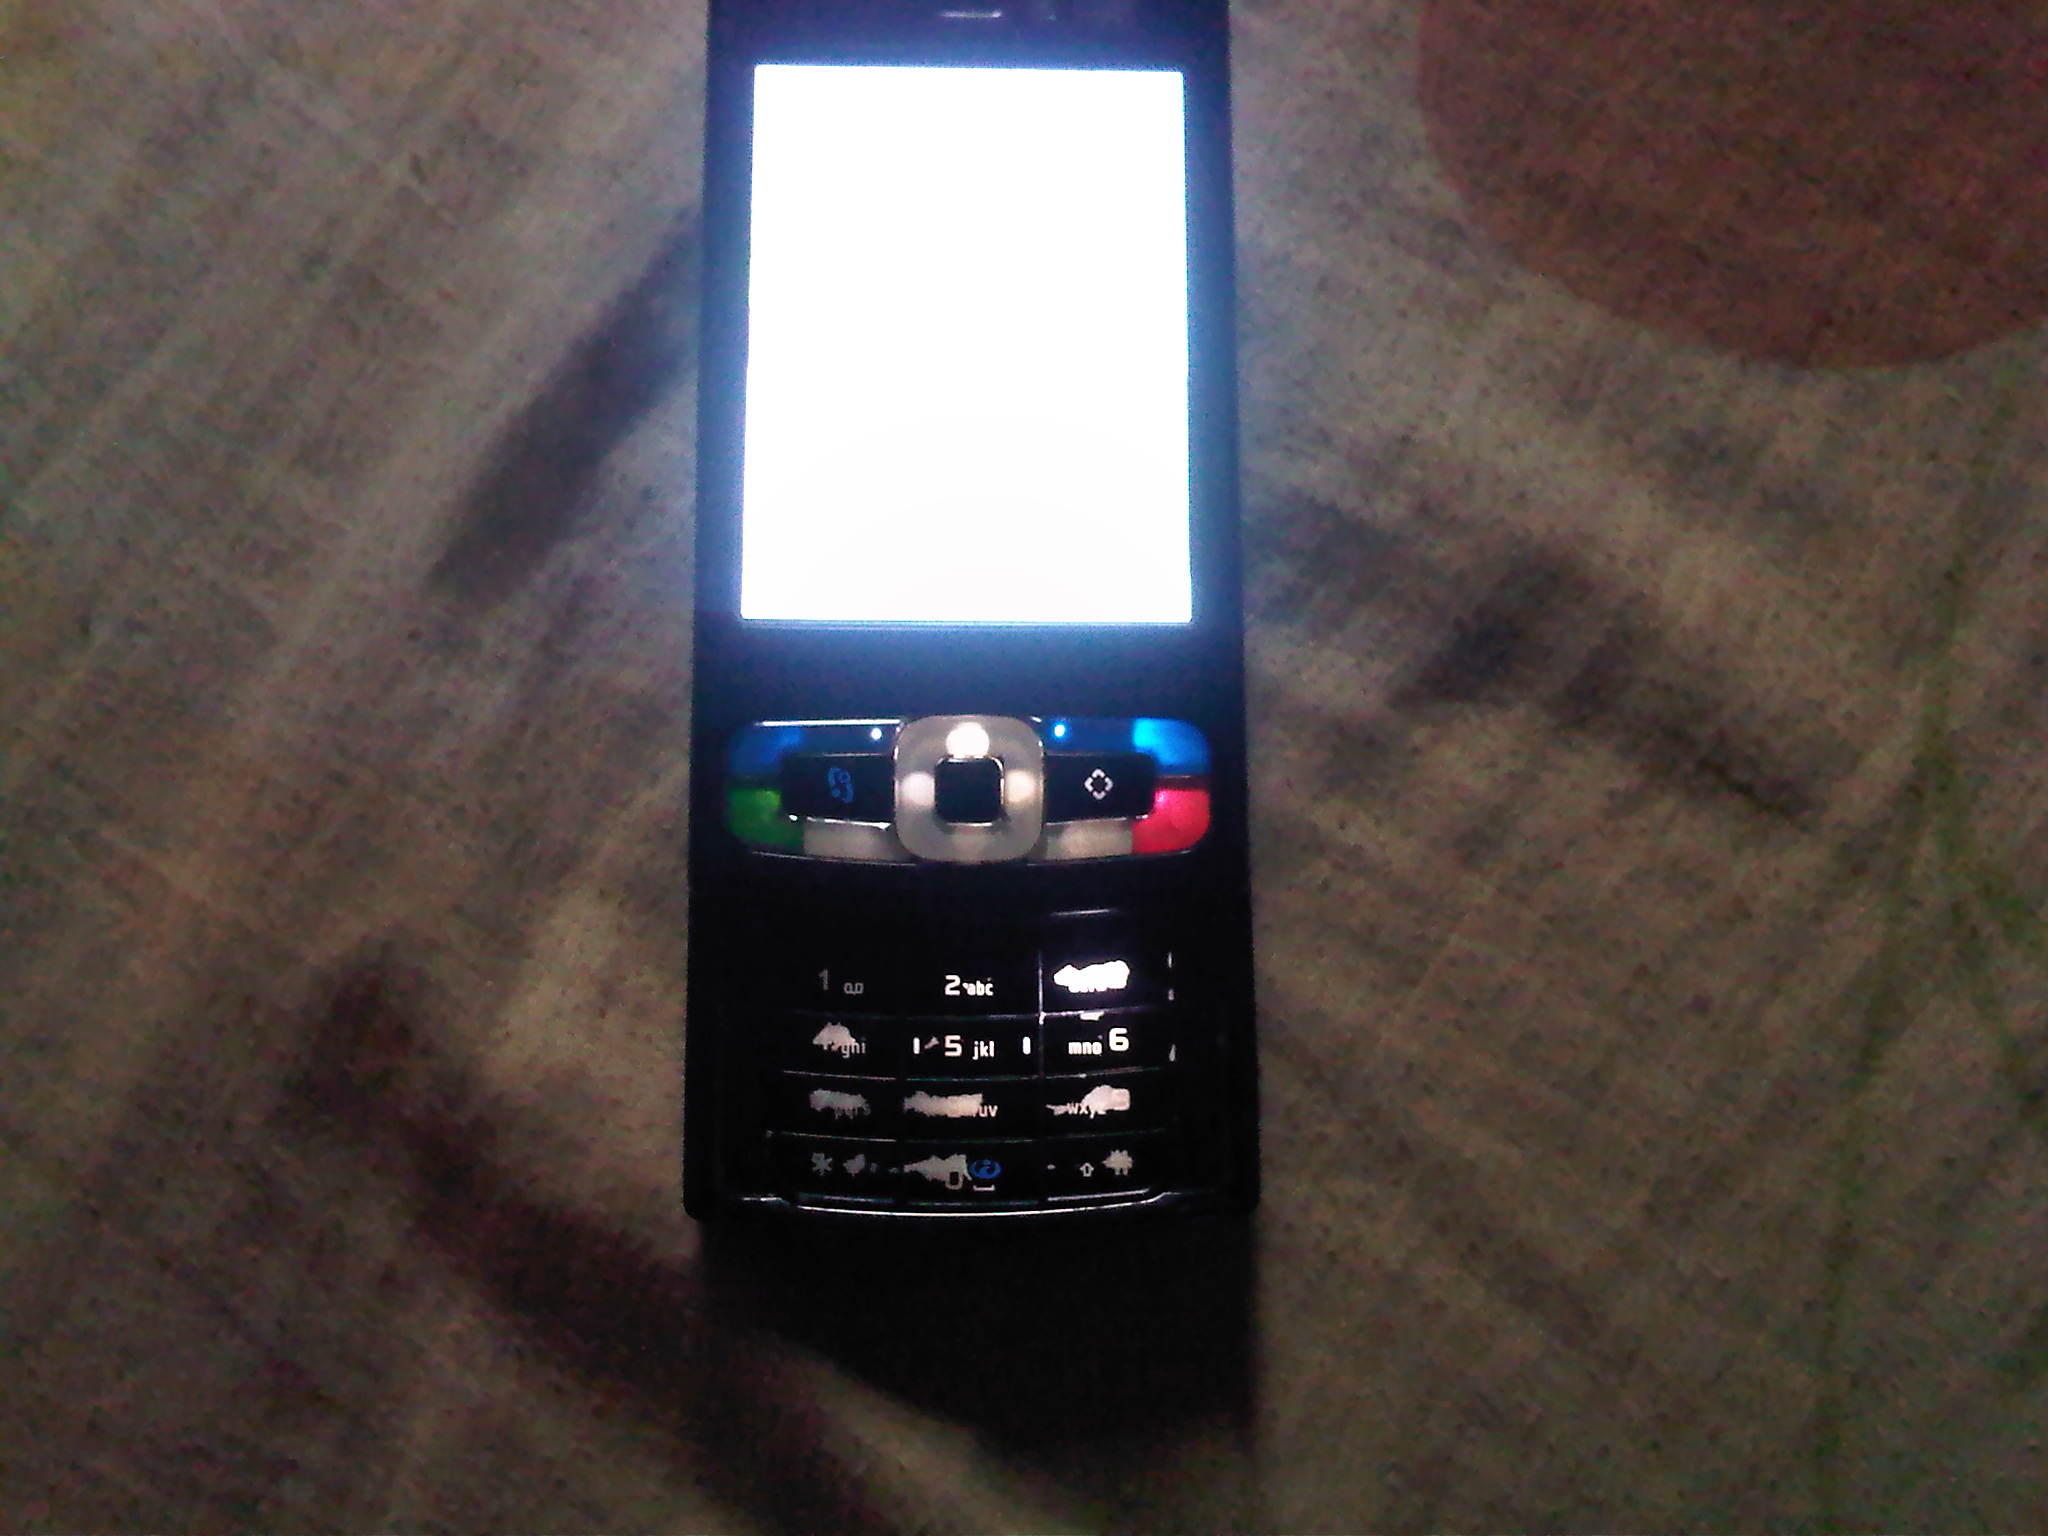 Used Nokia N95 8gb For Sale - Phone/Internet Market - Nigeria